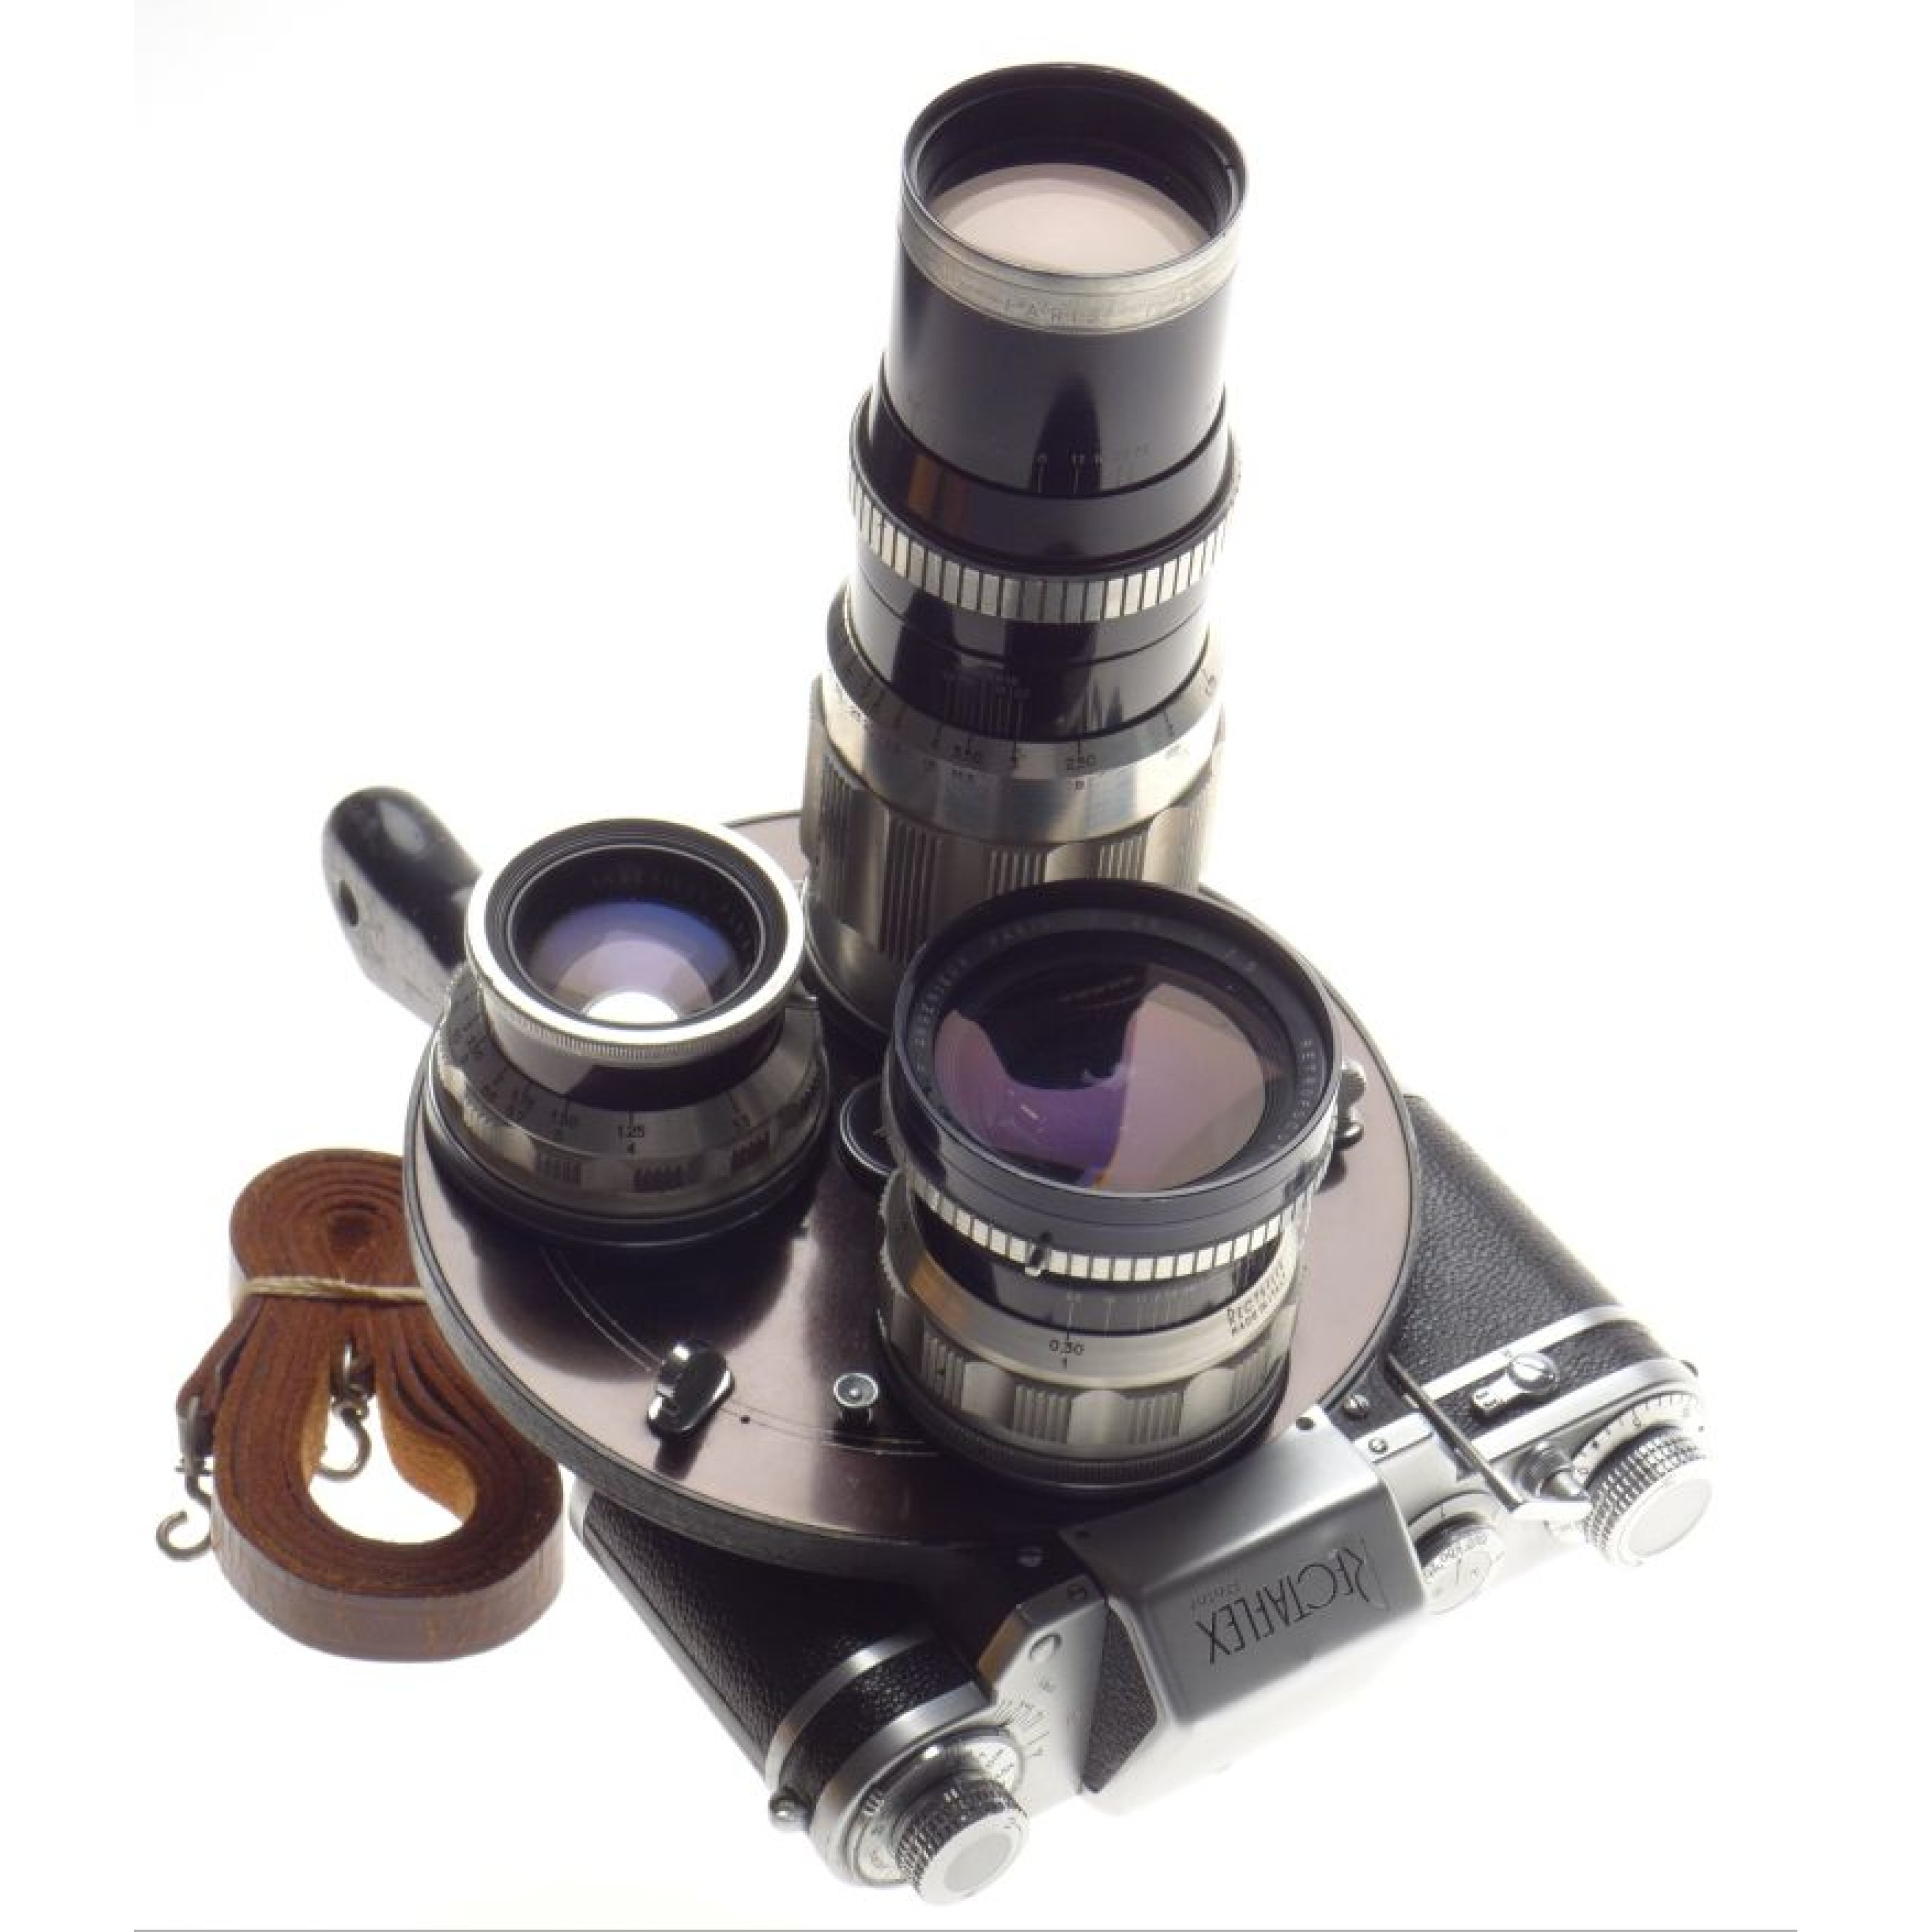 RECTAFLEX ROTOR turret vintage rare film camera 3 Angenieux Lenses